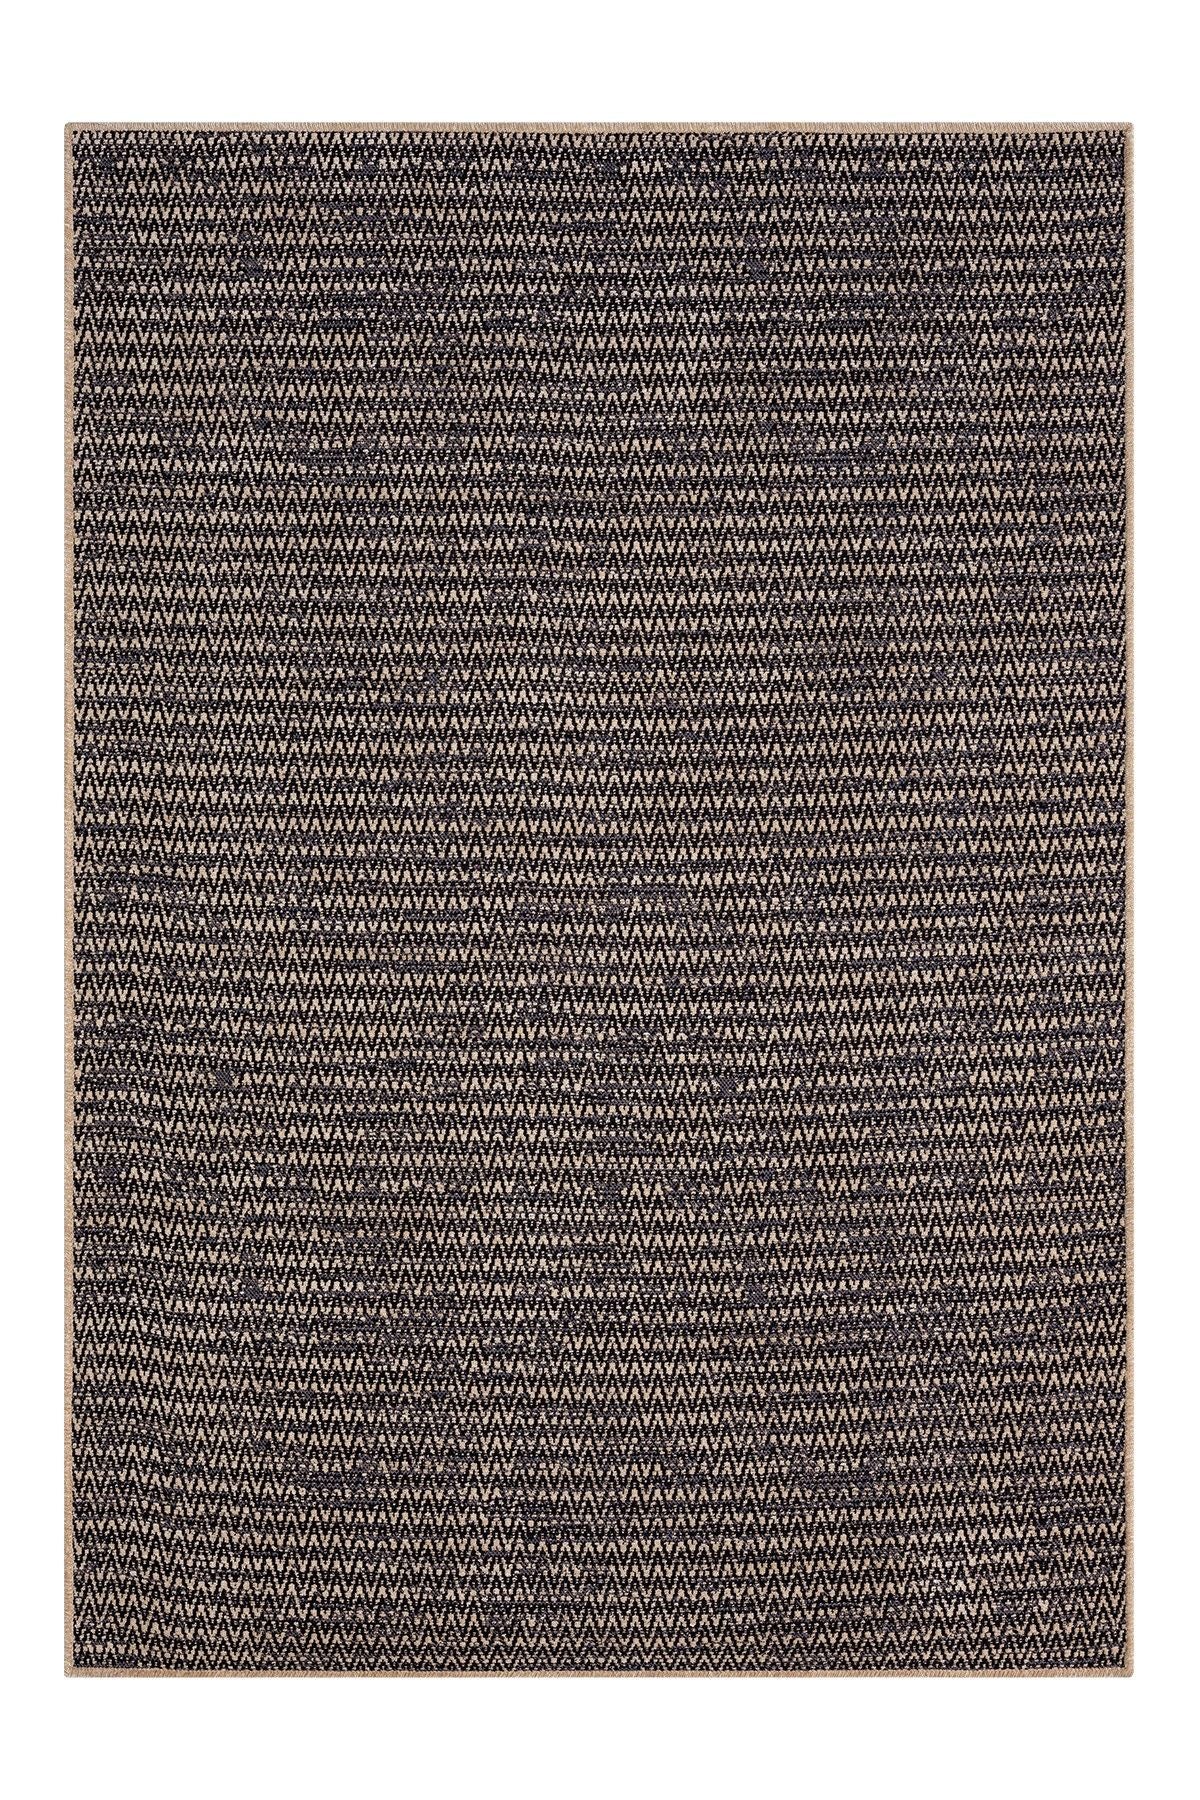 Terapia 3604 - Carpet (120 x 180)